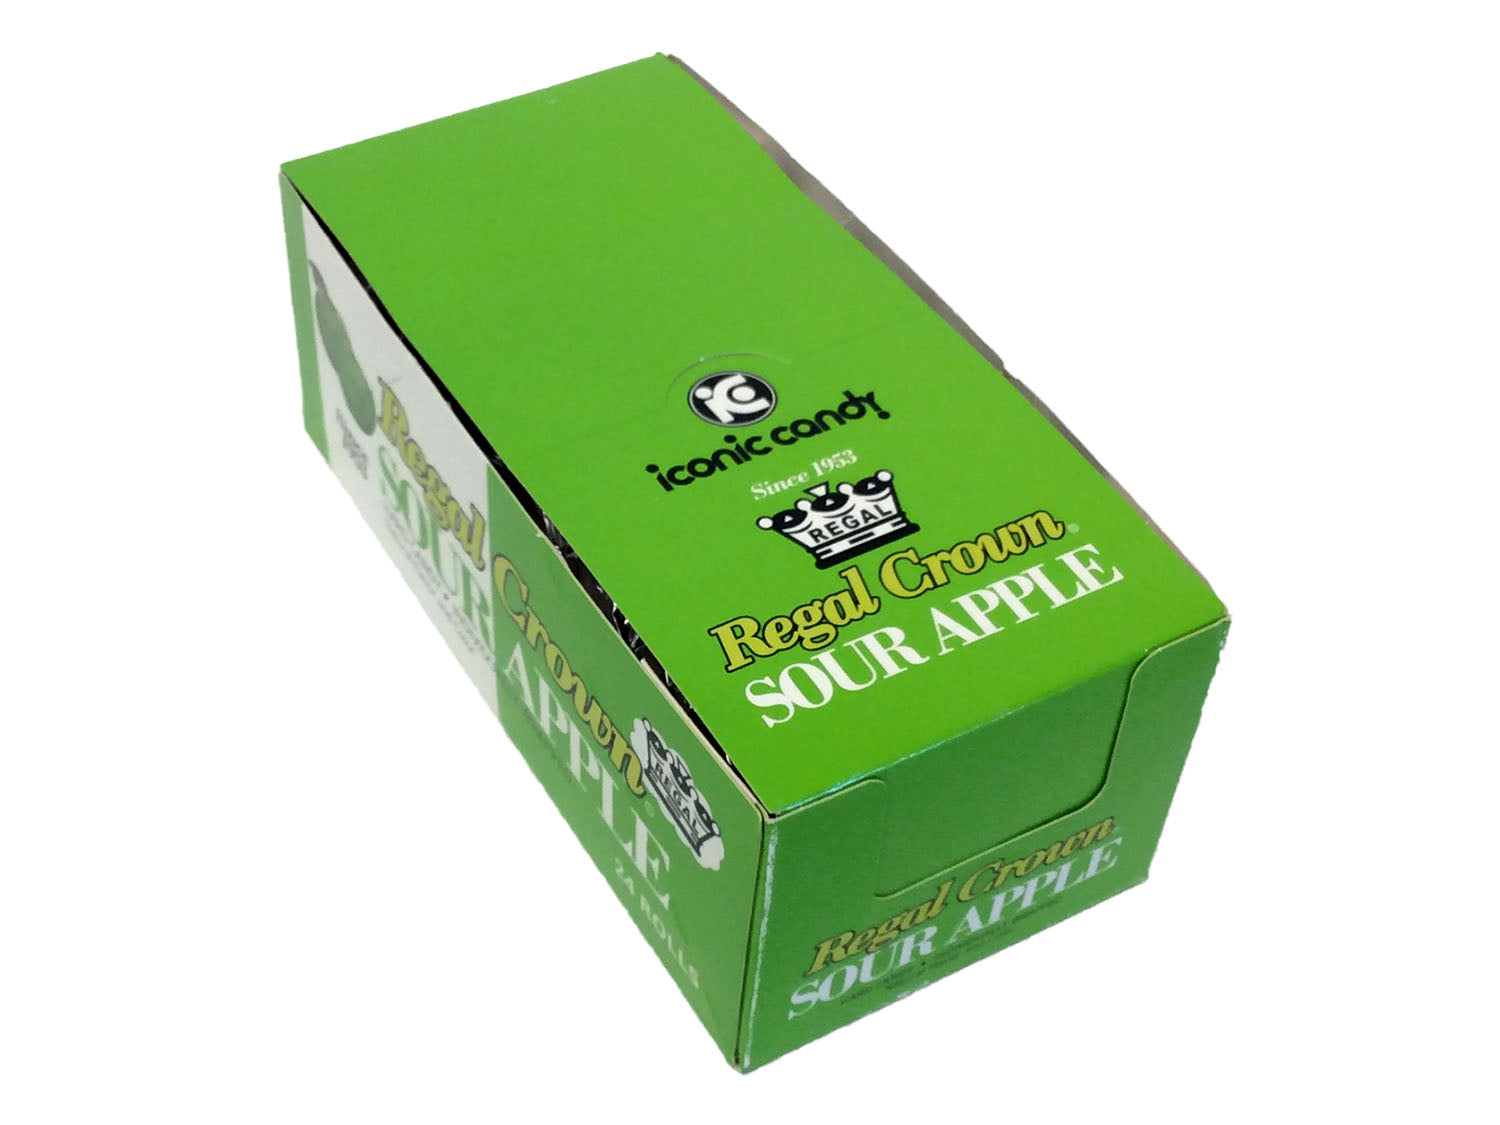 Regal Crown Sour Apple - 1.01 oz roll - box of 24